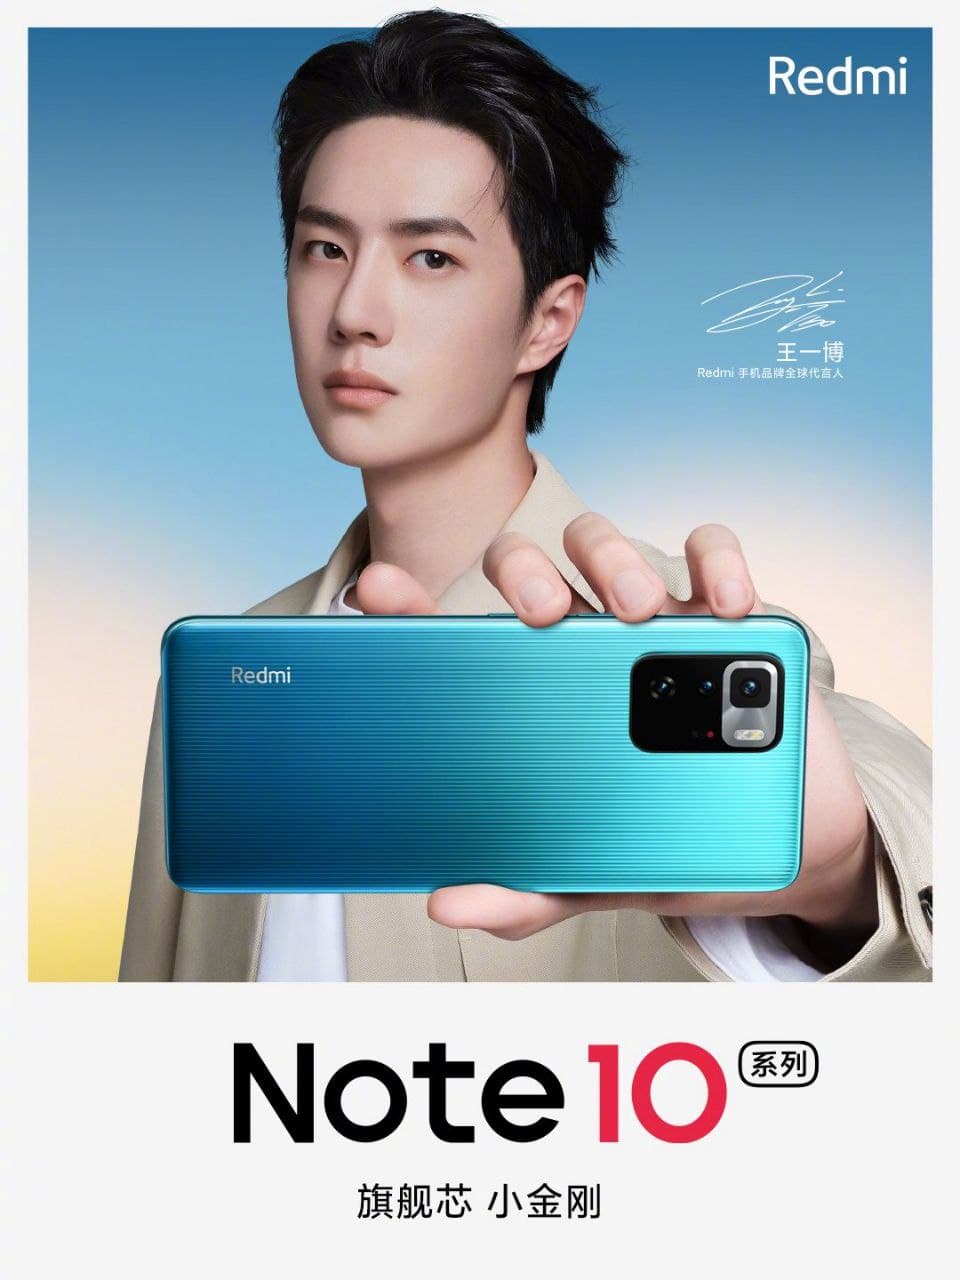 Redmi Note 10 Ultra poster 01